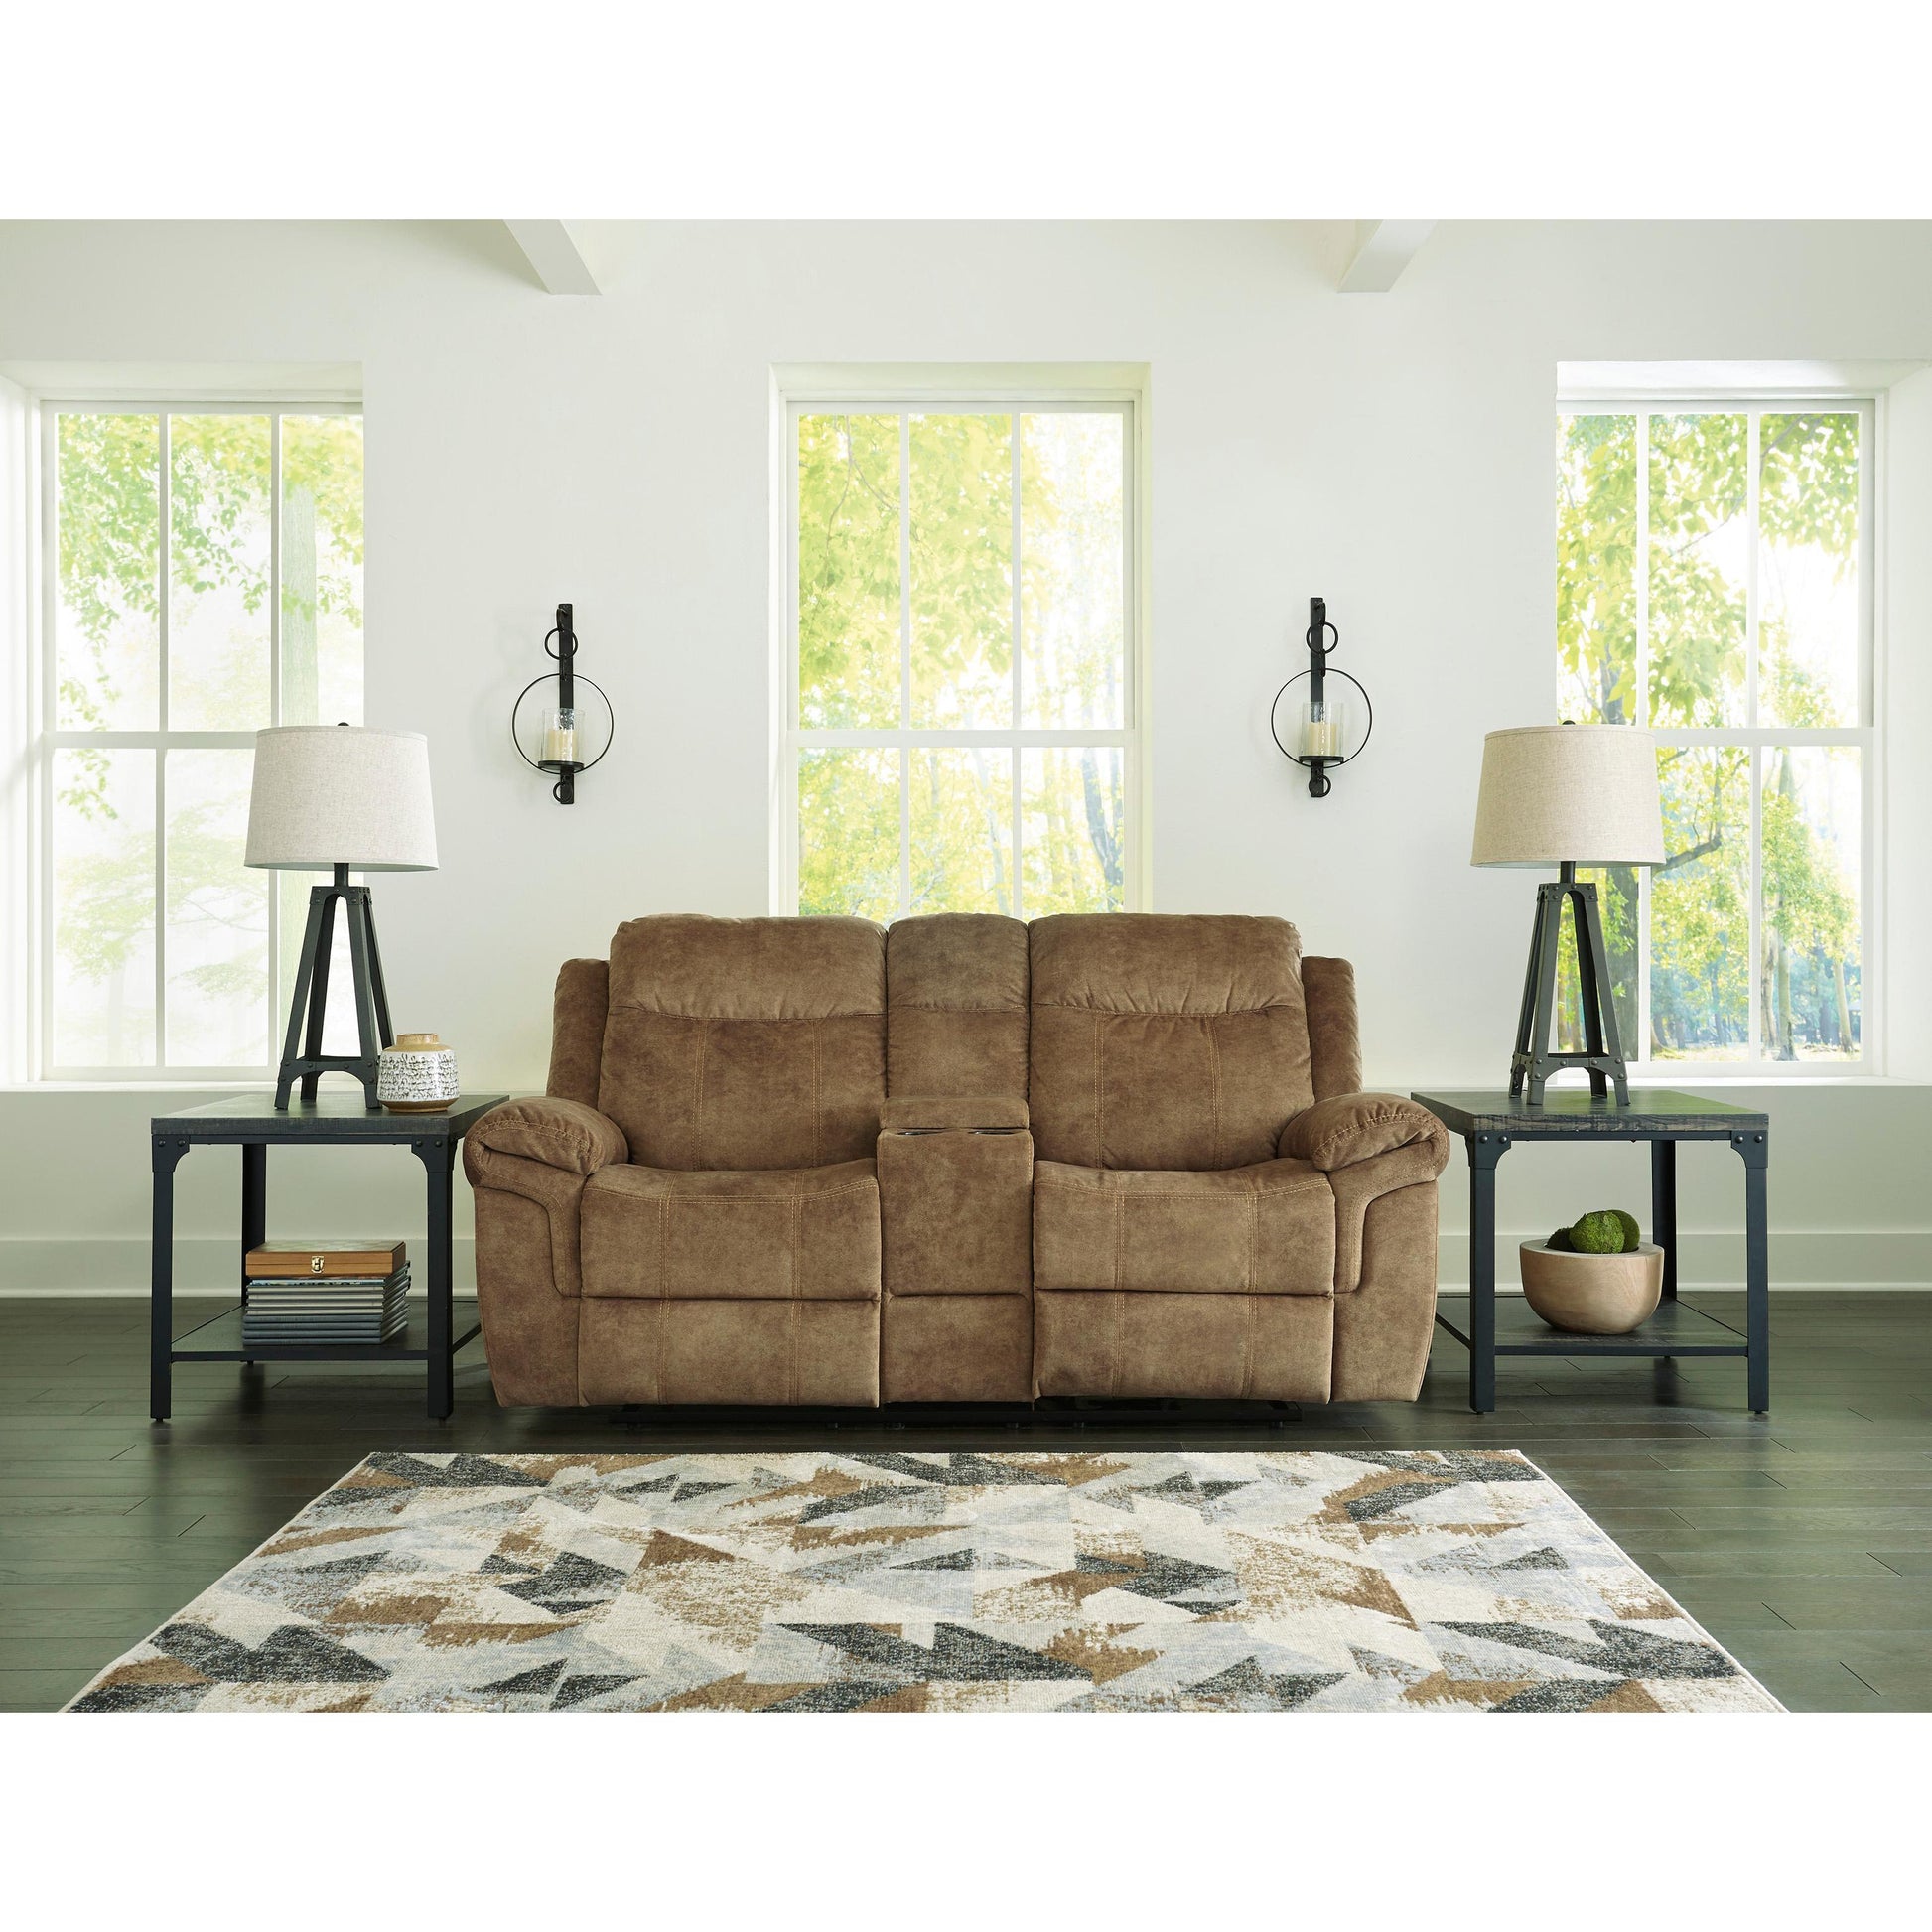 Signature Design by Ashley Huddle-Up 82304 3 pc Reclining Living Room Set IMAGE 5